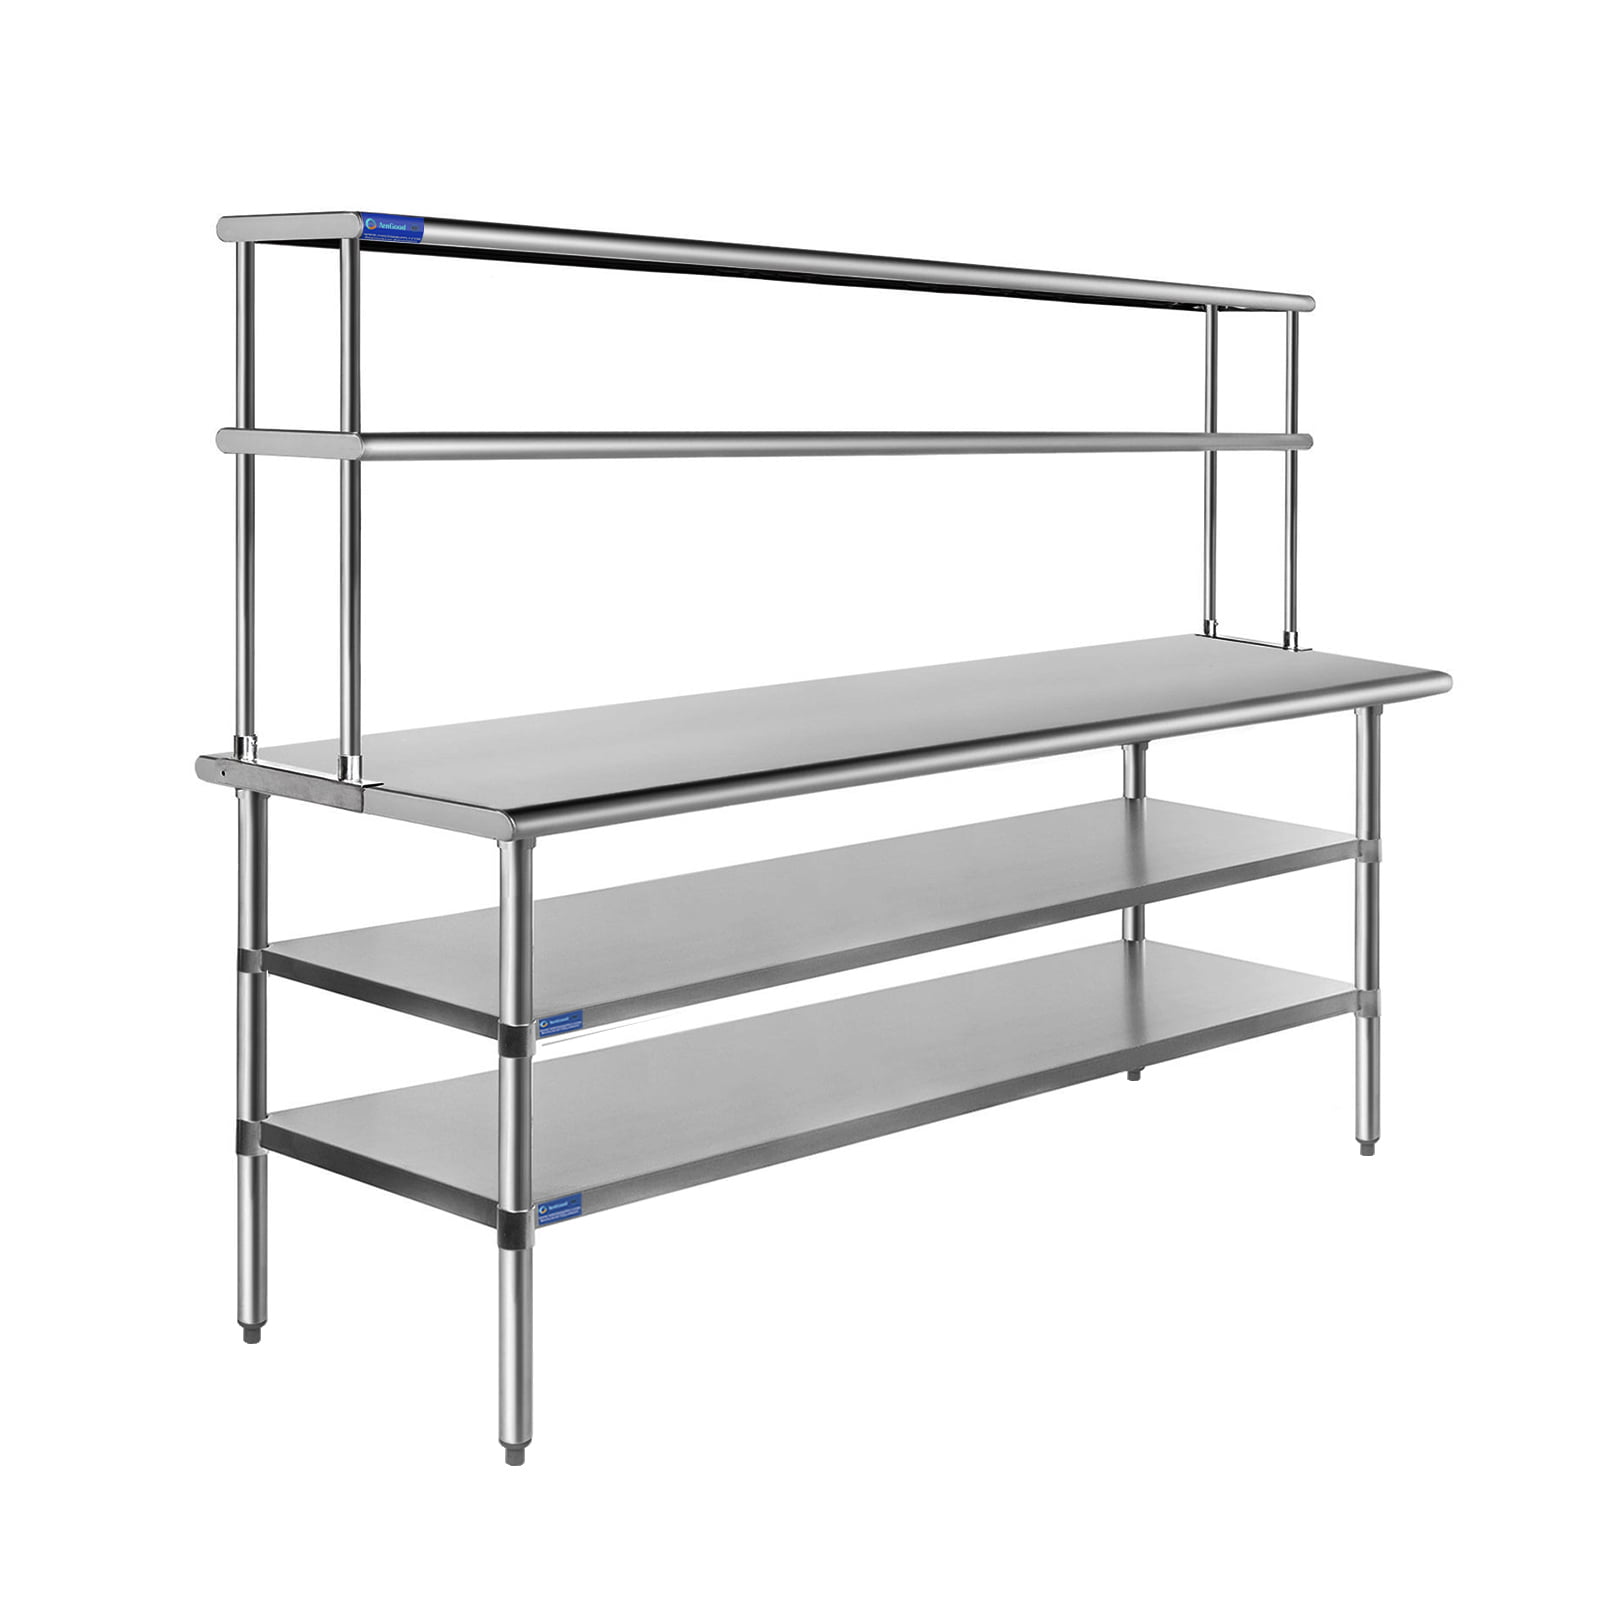 Adjustable Double Overshelf 14 X 72 Stainless Steel for Work Table 